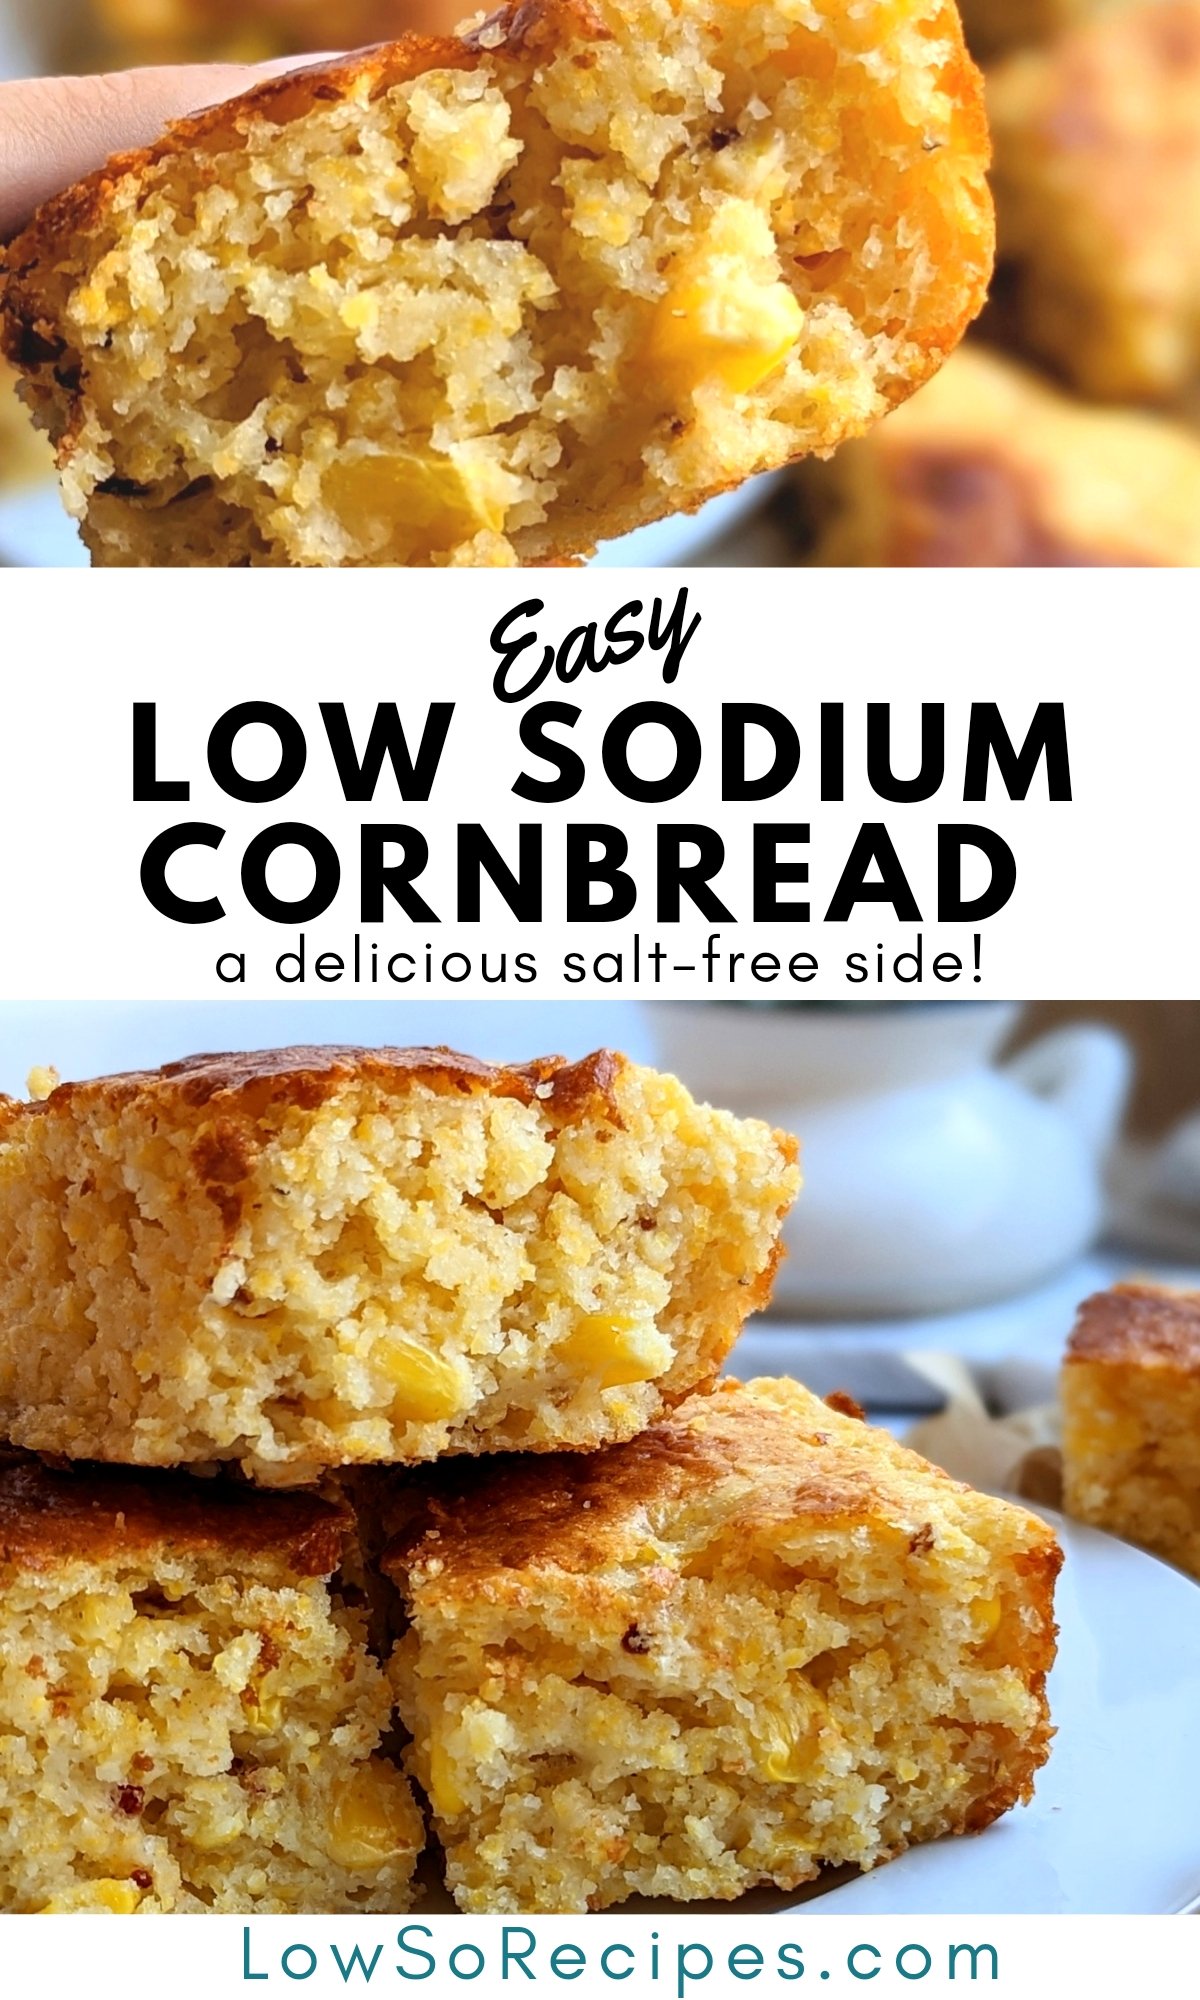 low sodium cornbread recipe no salt healthy salt free baked goods recipe